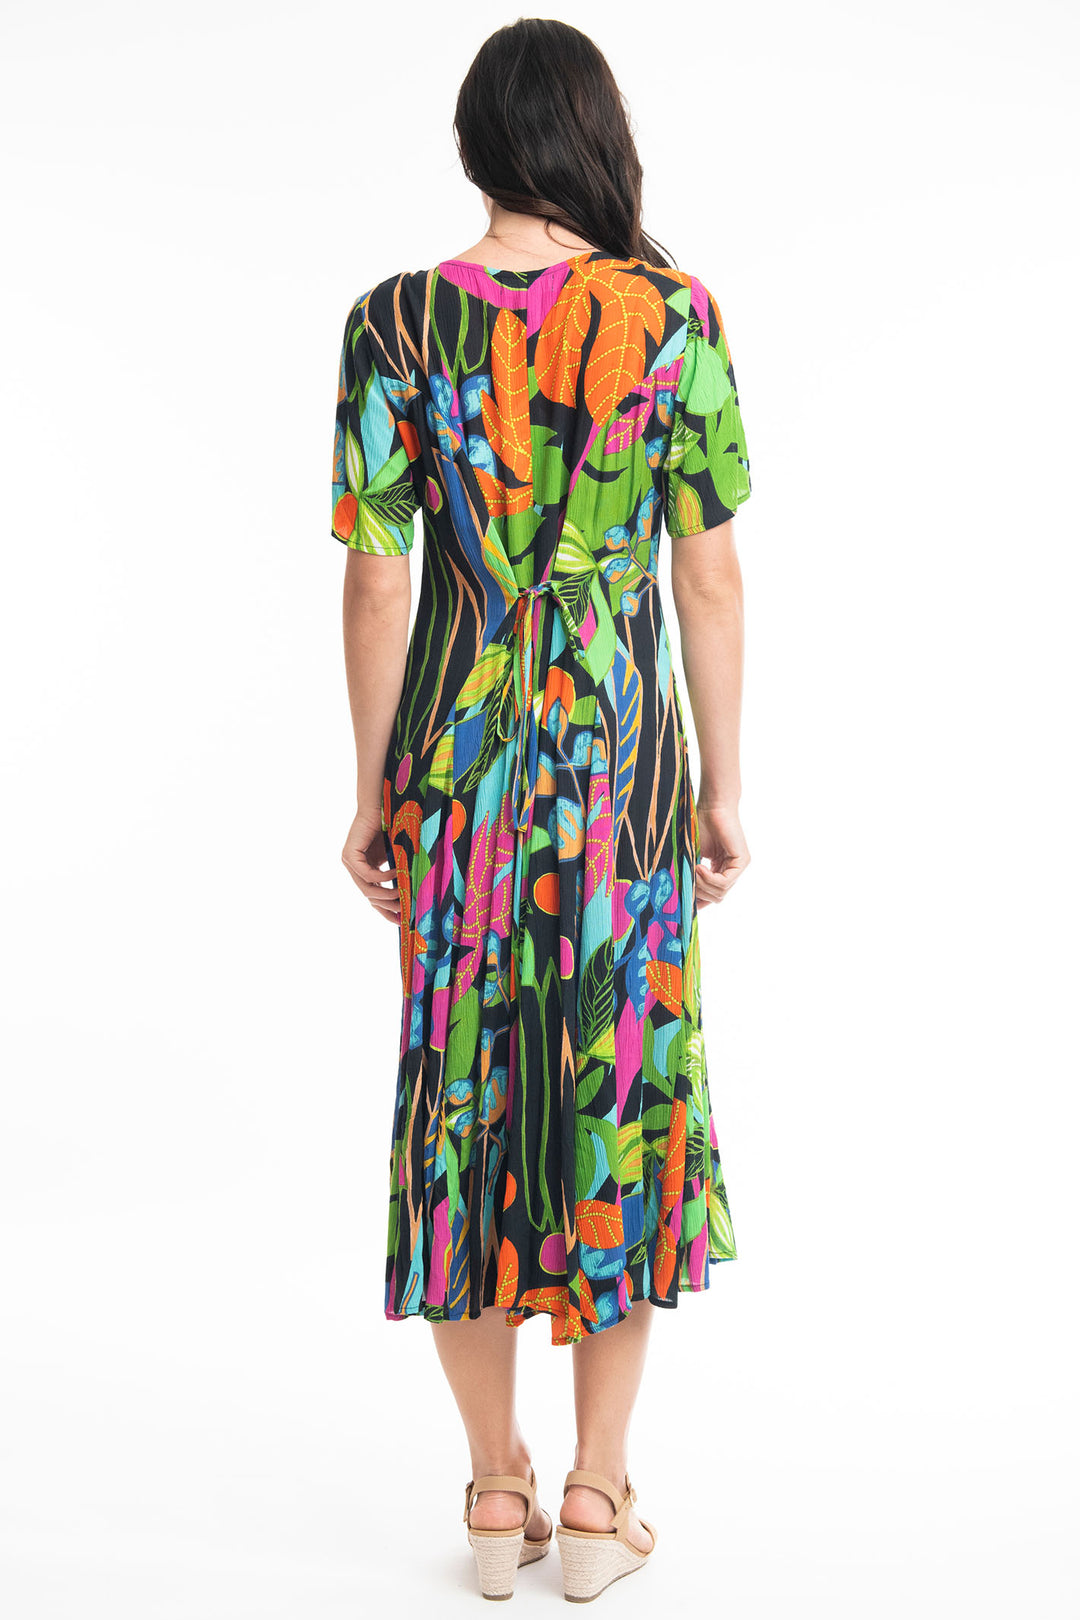 Orientique O9177 Nicossia Black Tropical Print Godet Dress - Experience Boutique